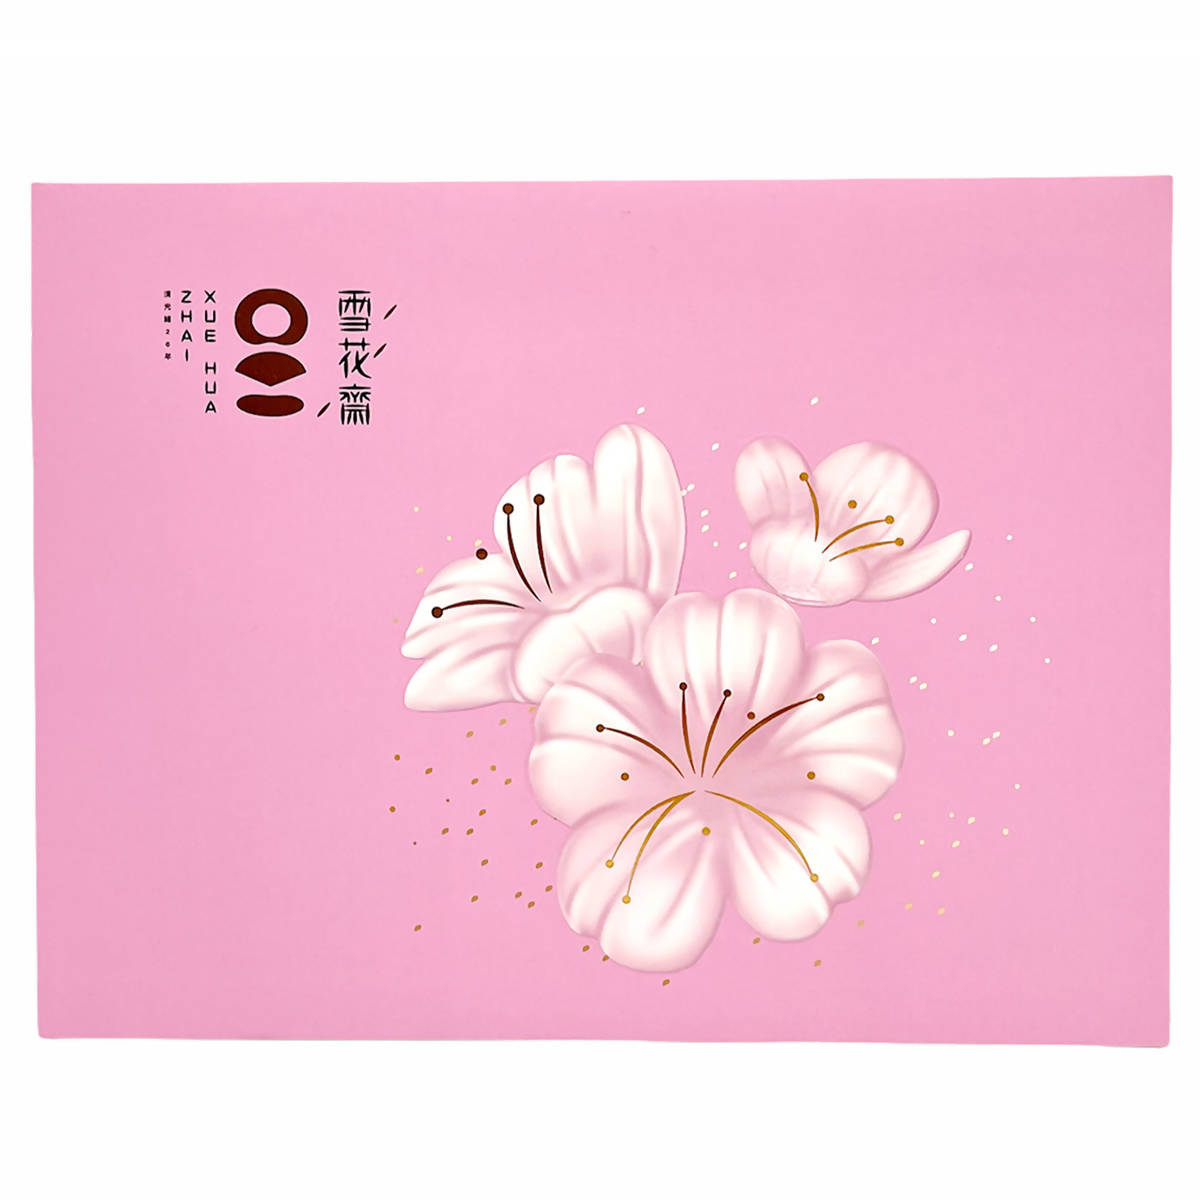 Taiwan direct mail【Xuehuazhai】XUE HUA ZHAI Snowflake Mooncake Pure Mung Bean Paste Gift Box (Lacto-Vegetarian) 648g 6pcs 